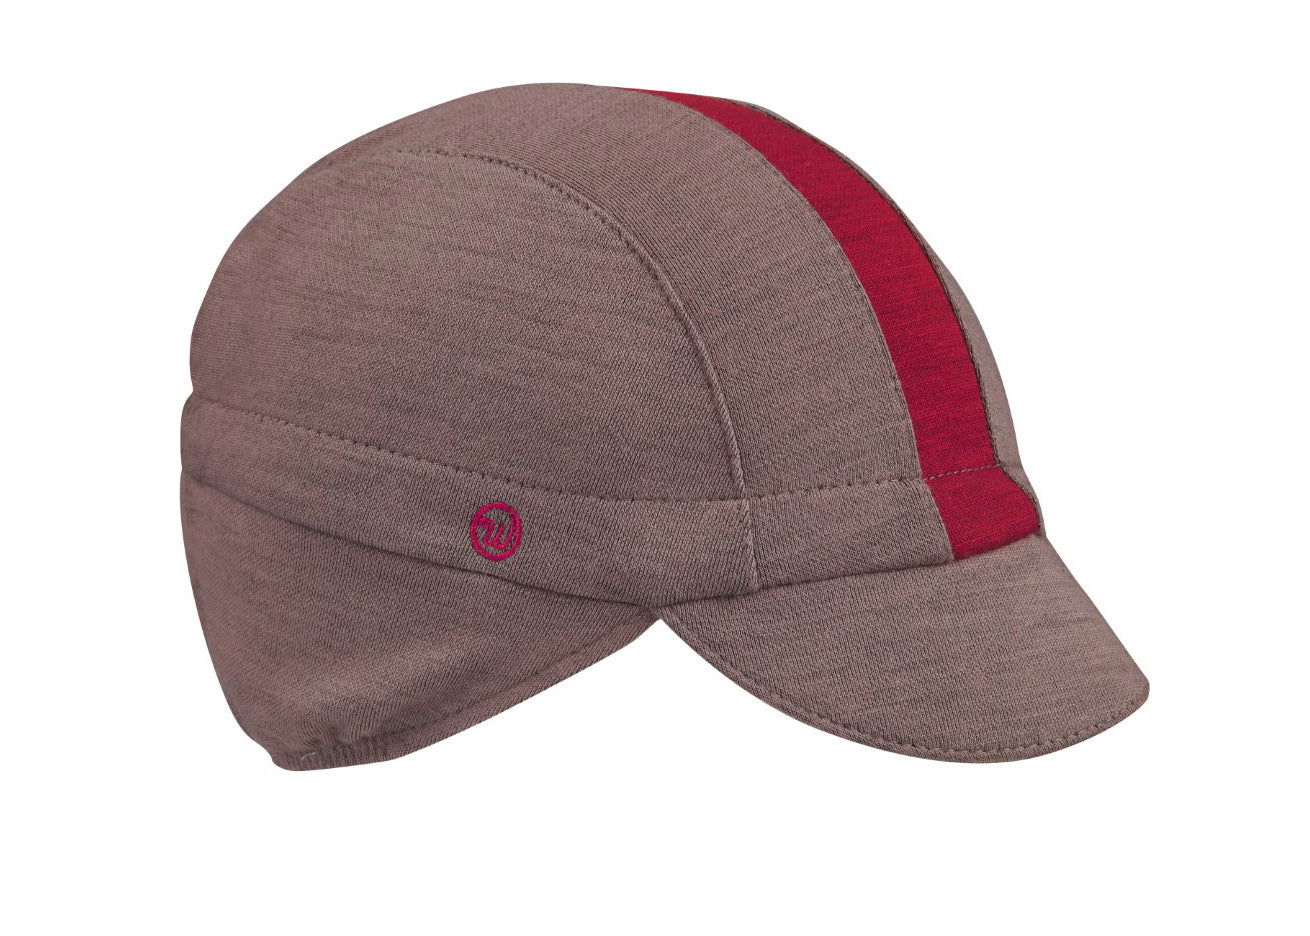 Grey/Red Stripe Merino Wool Ear Flap Cap. Angled view.